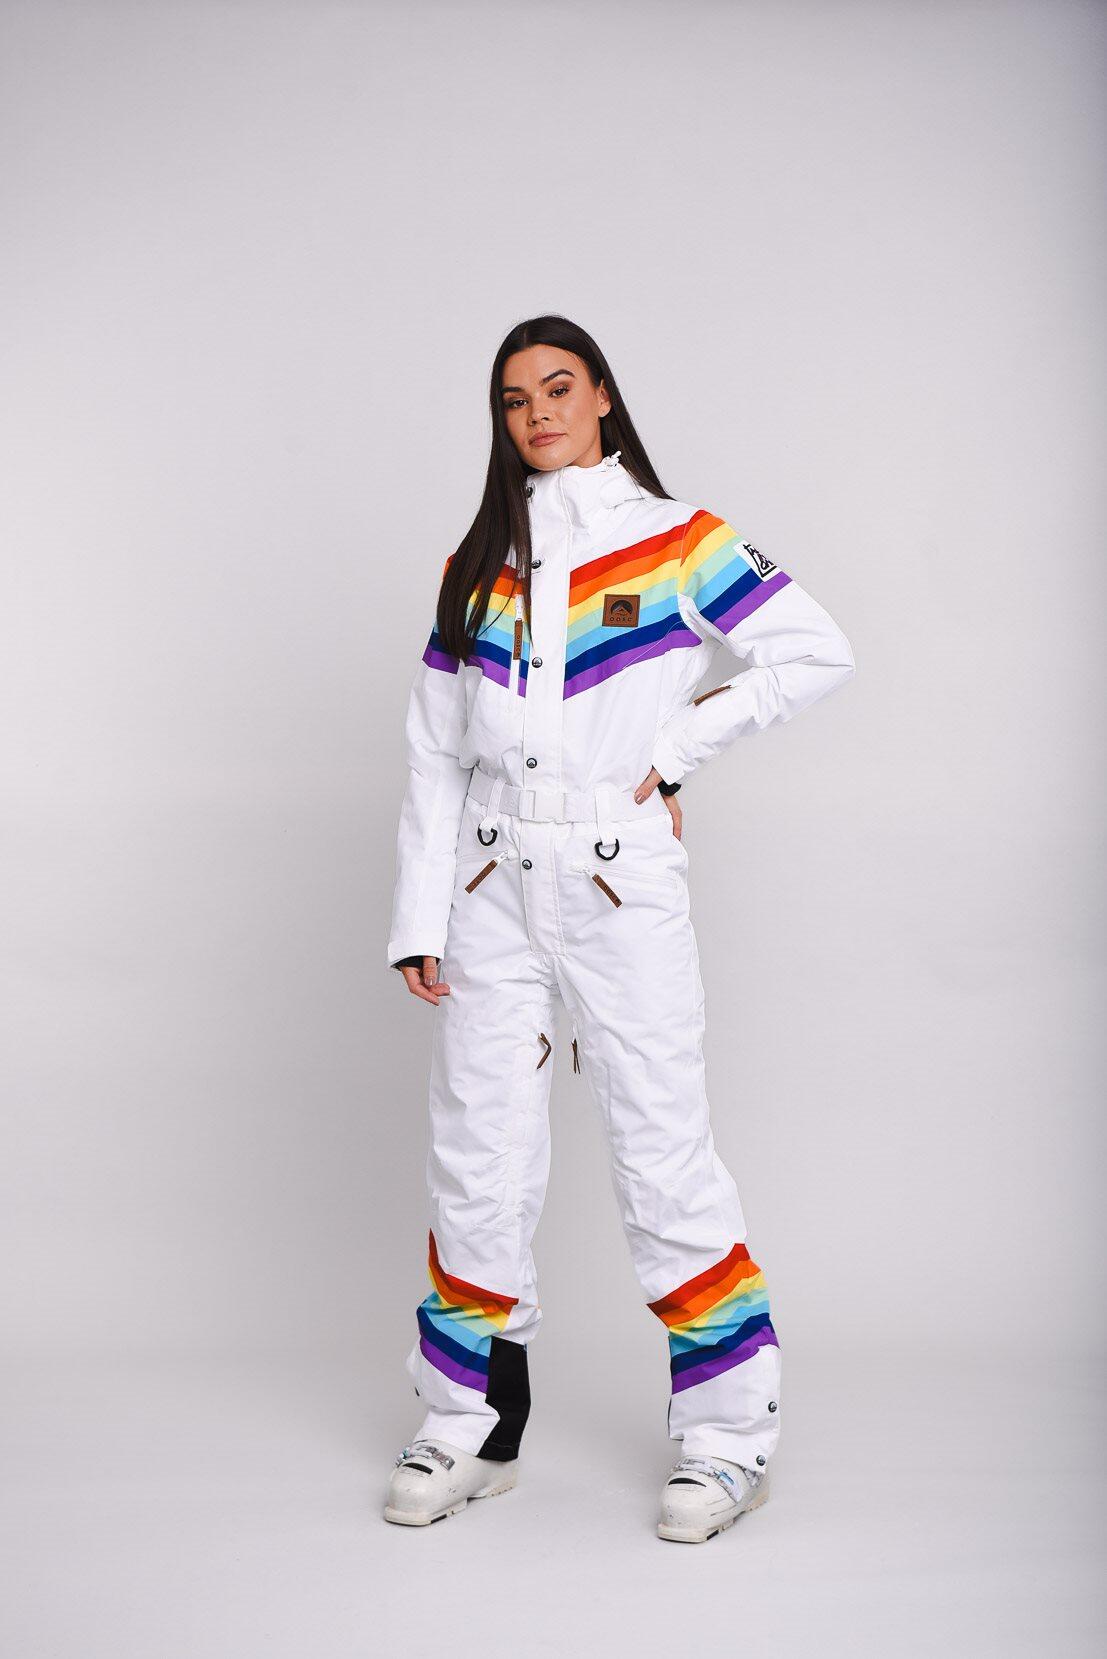 Rainbow Road Ski Suit - Women's 1/5